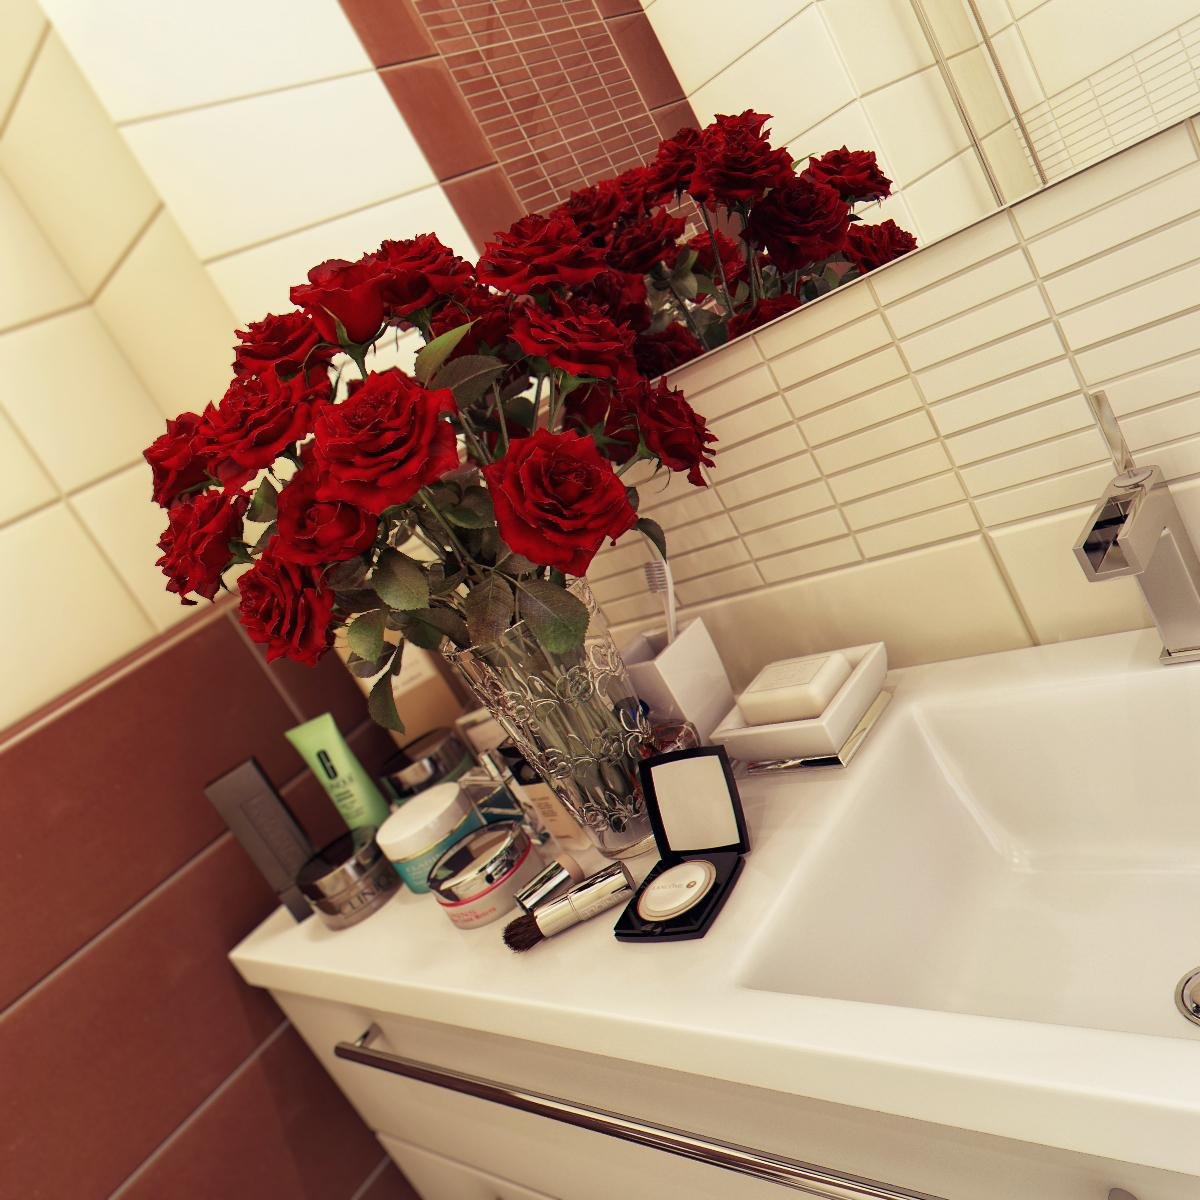 Ванная с лепестками роз